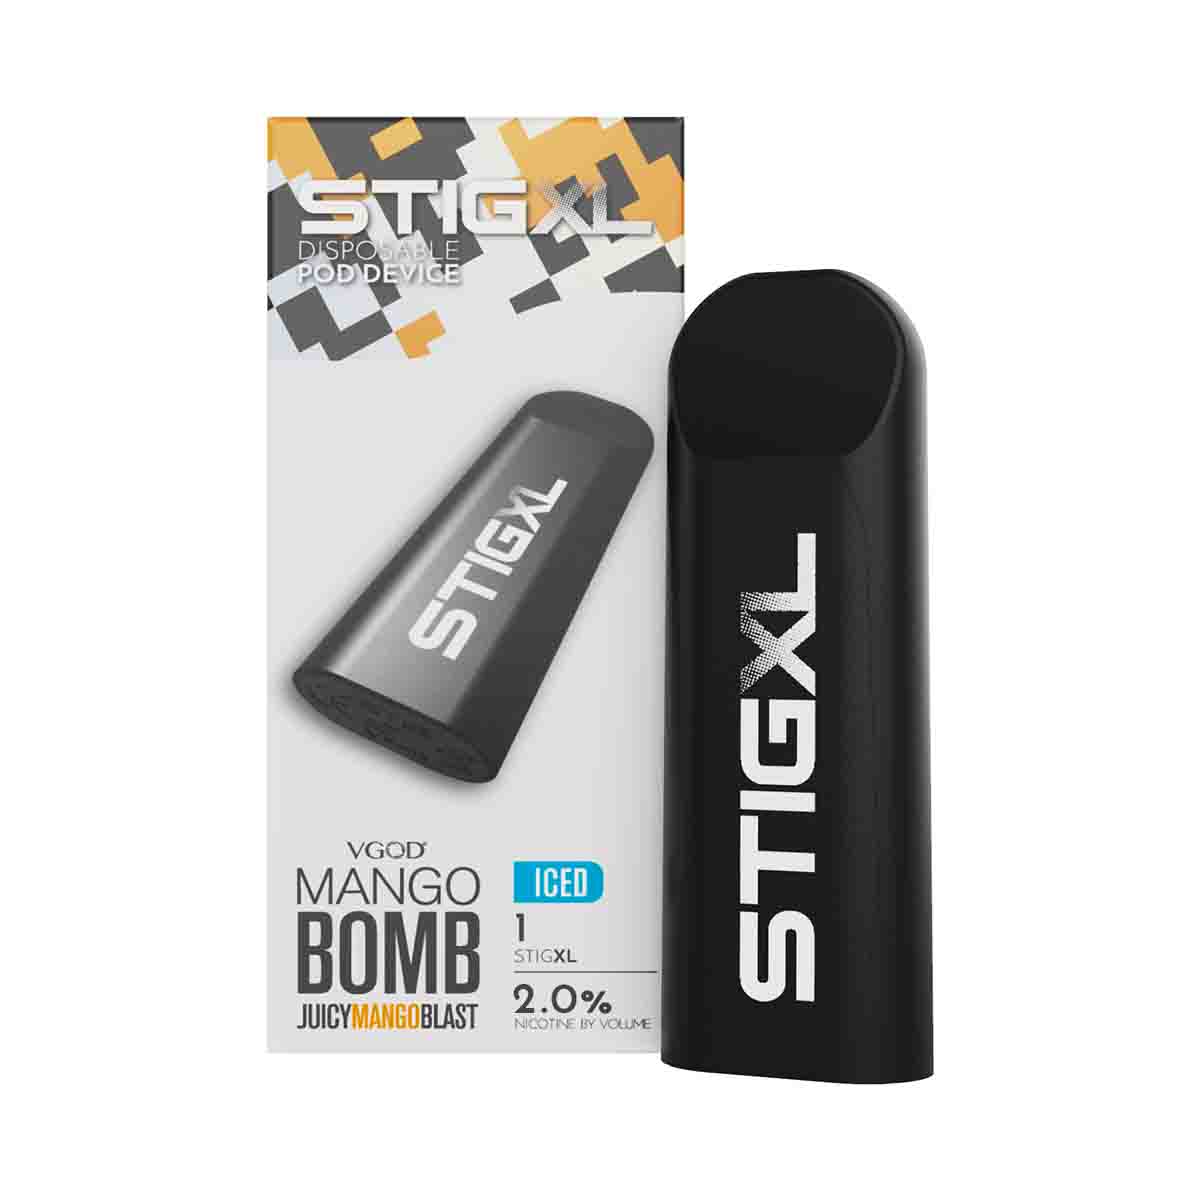 Stig XL Mango Bomb Ice Disposable Vape